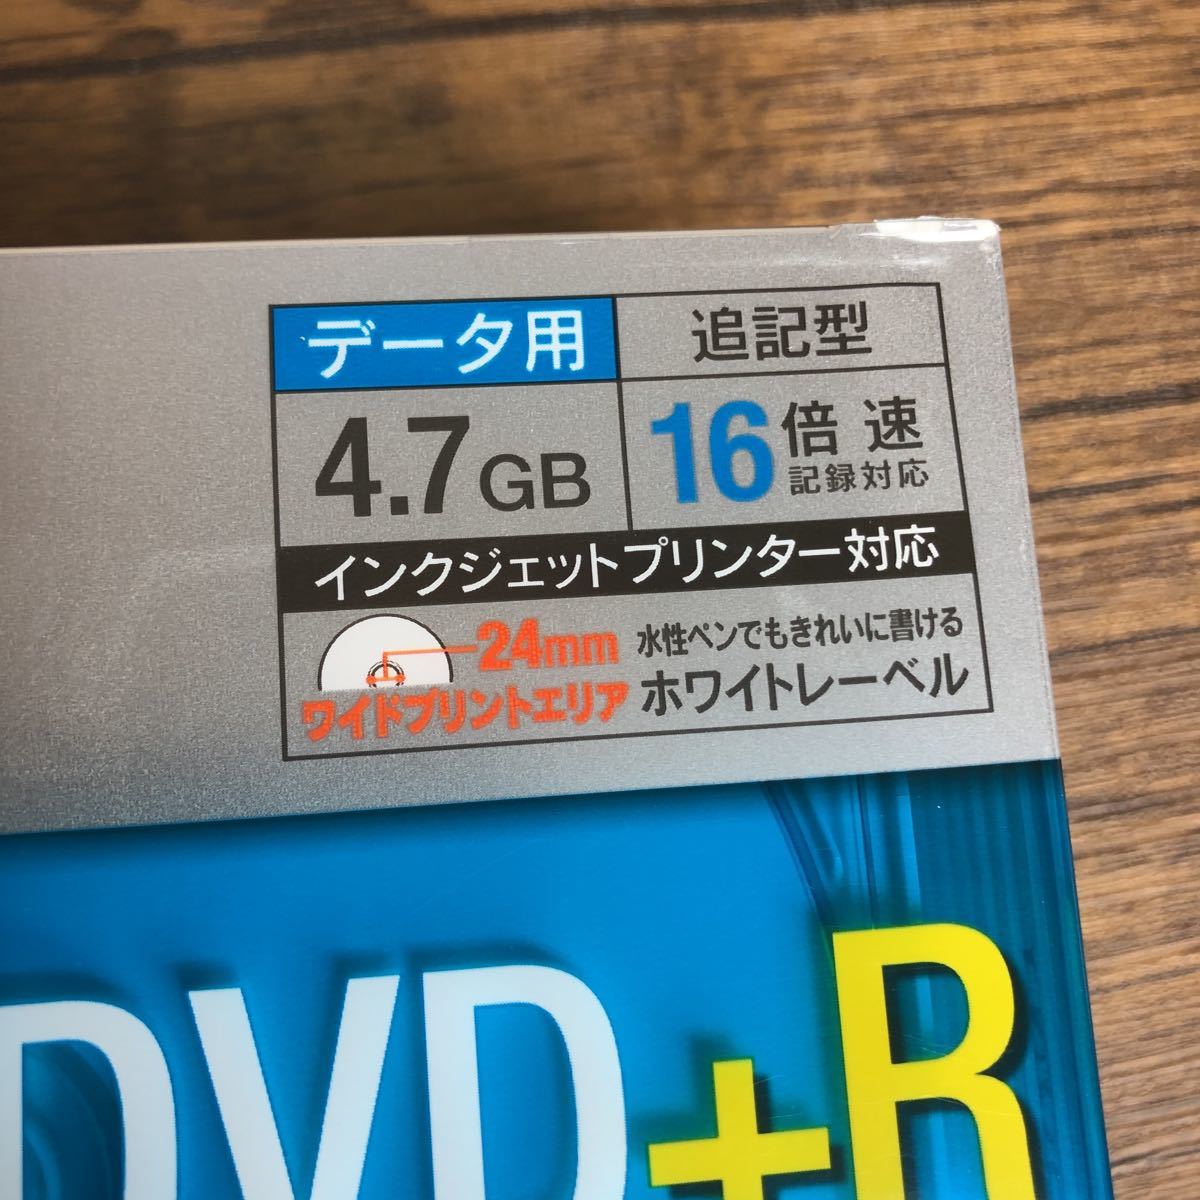 SONY/ソニー データ用 DVD＋R 10DPR47HPSH 10枚入